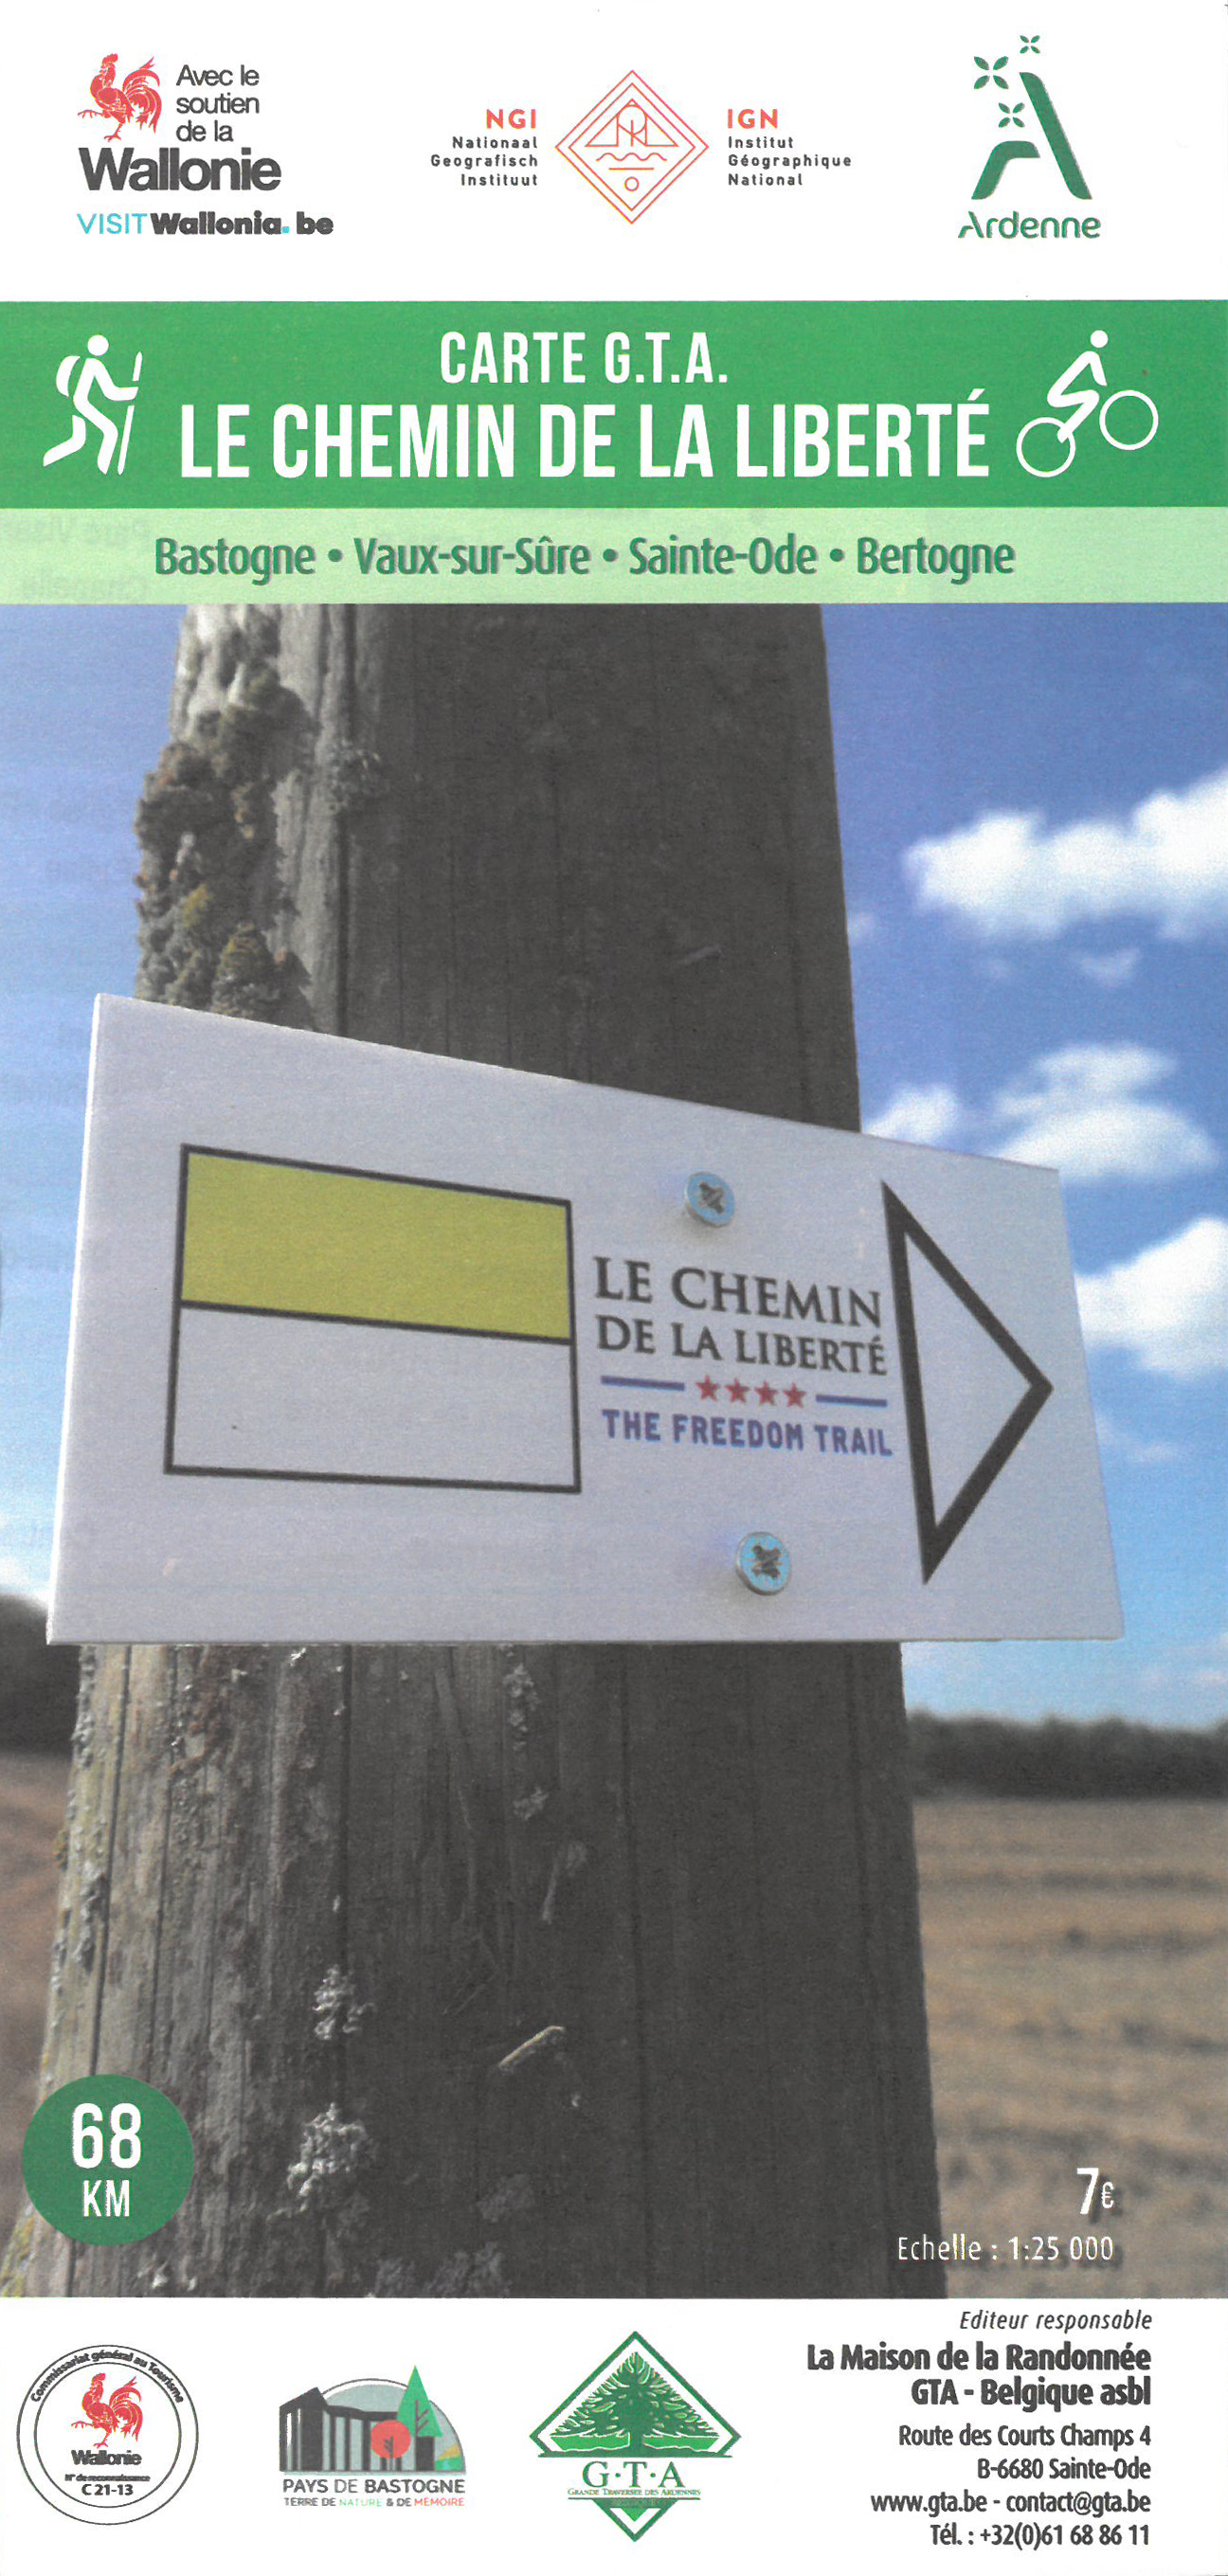 Online bestellen: Wandelkaart 206 Le chemin de la liberté (Vrijheidspad - Freedom Trail) | NGI - Nationaal Geografisch Instituut